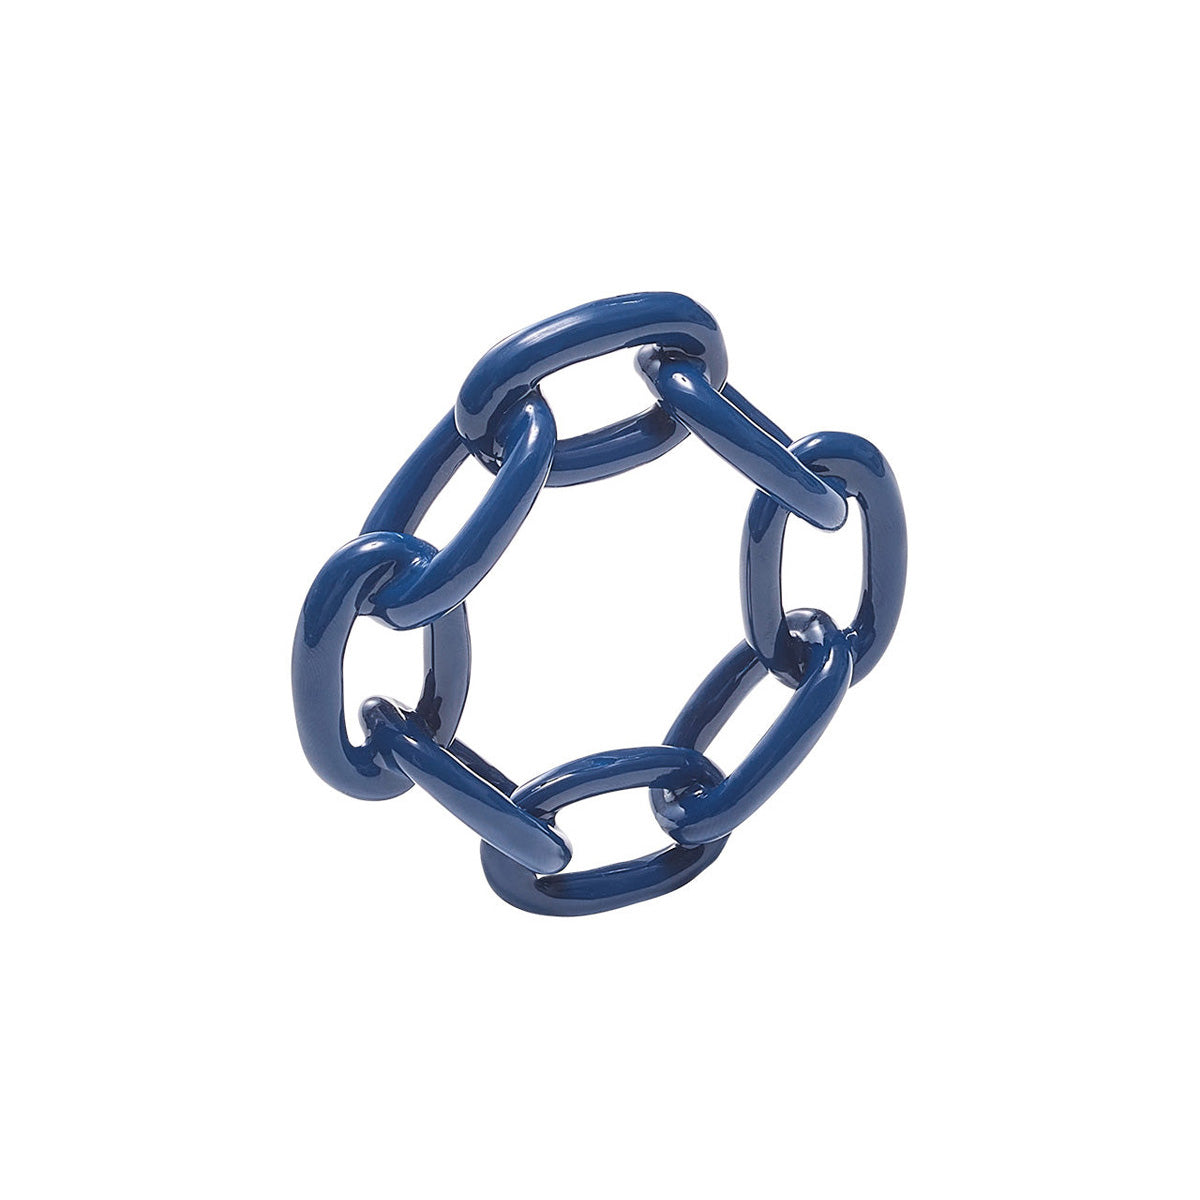 Enamel Chain Link Napkin Ring - Set of 4 by Kim Seybert